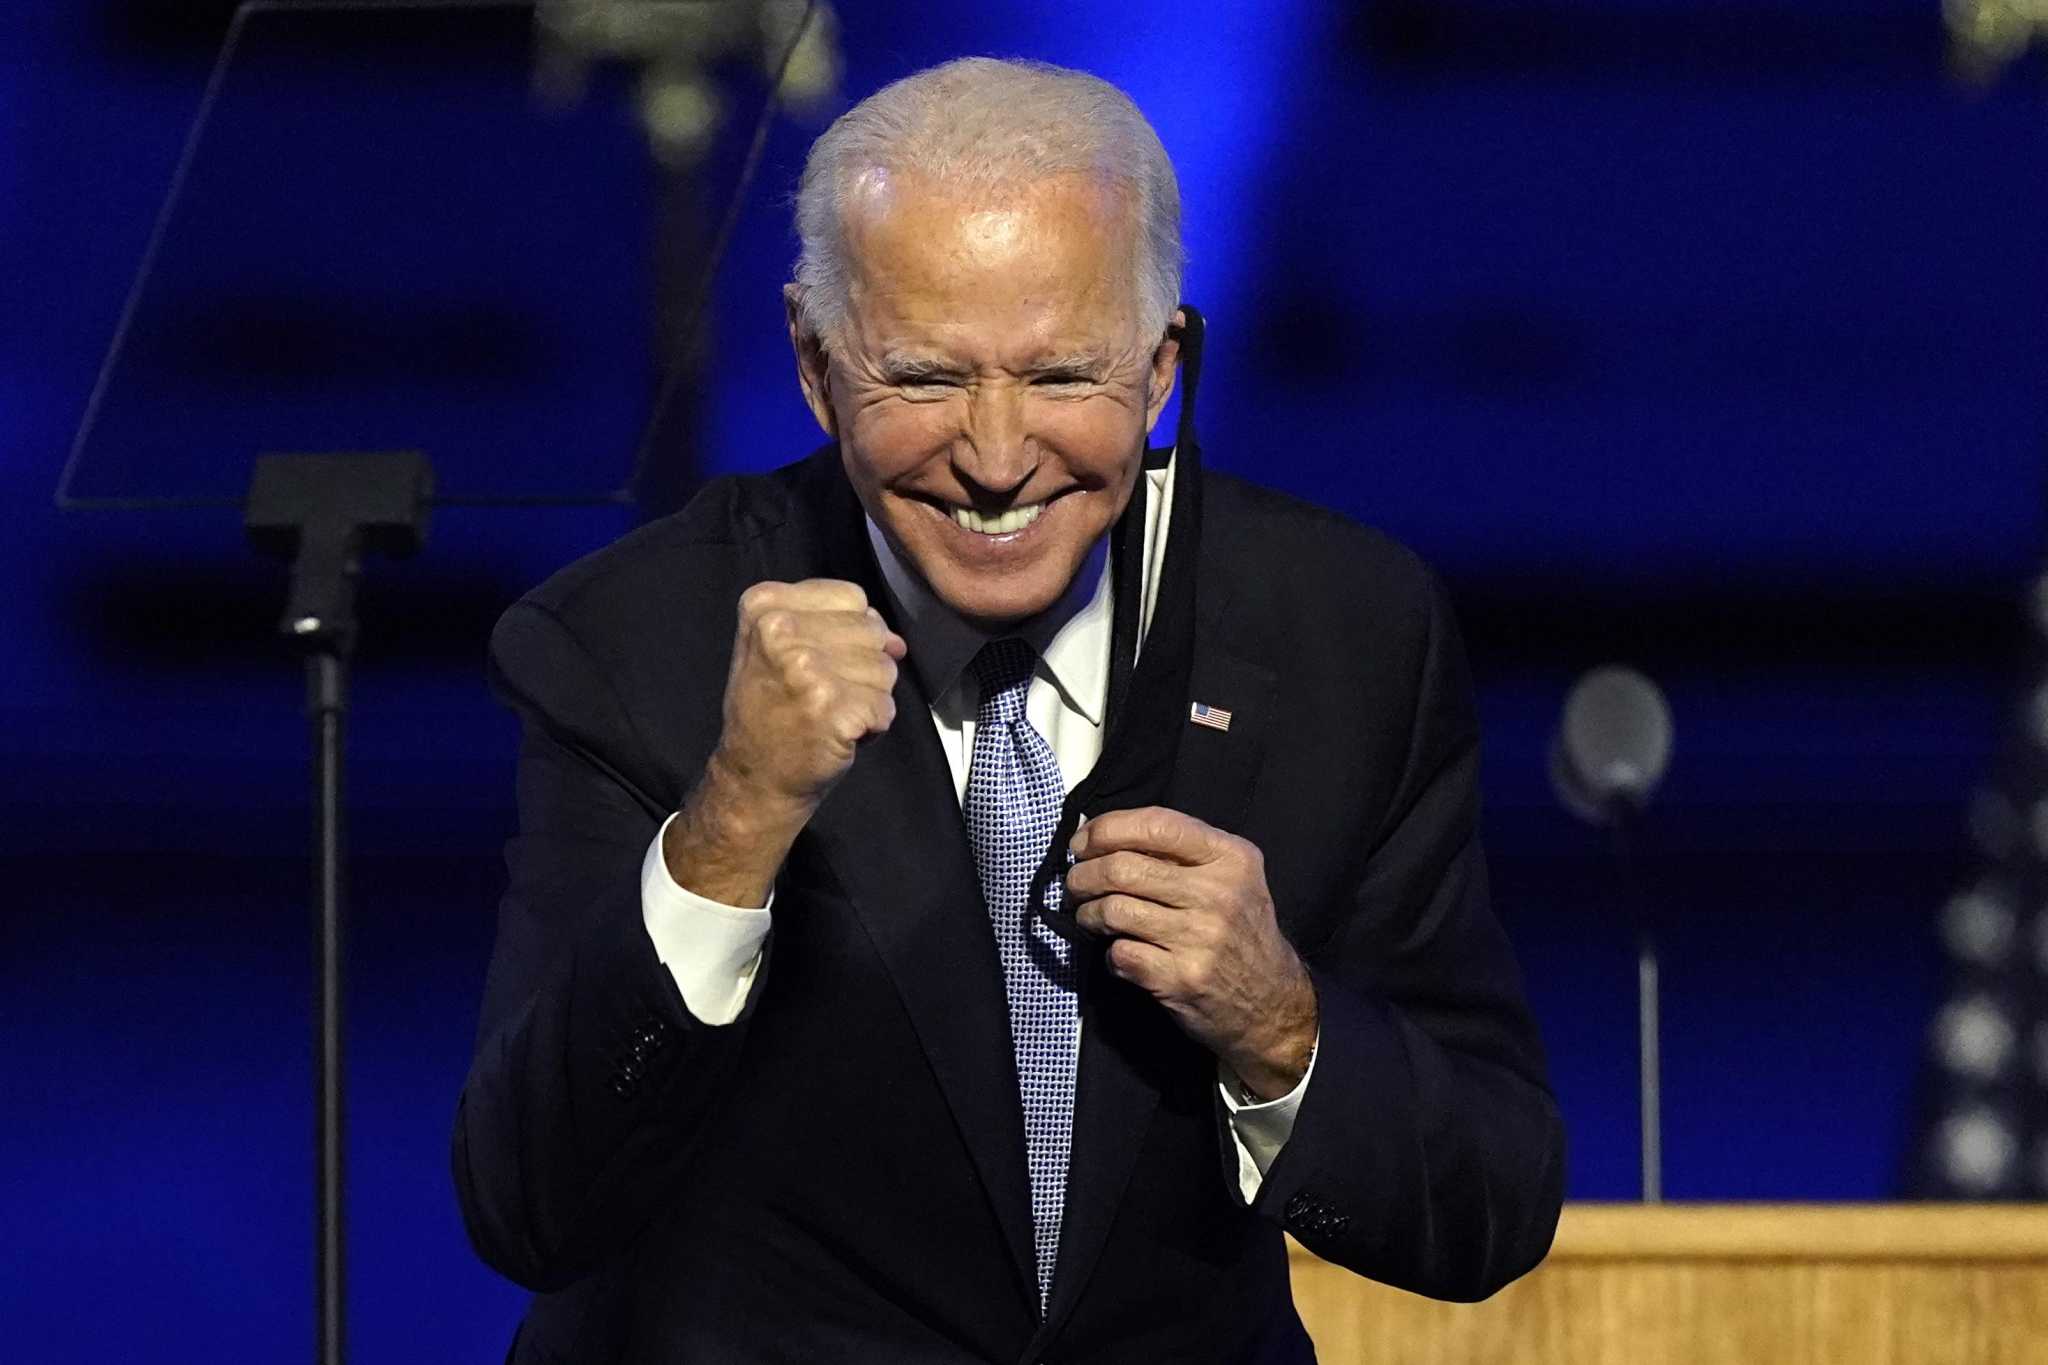 President Joe Biden lands in Westchester for Greenwich fundraiser